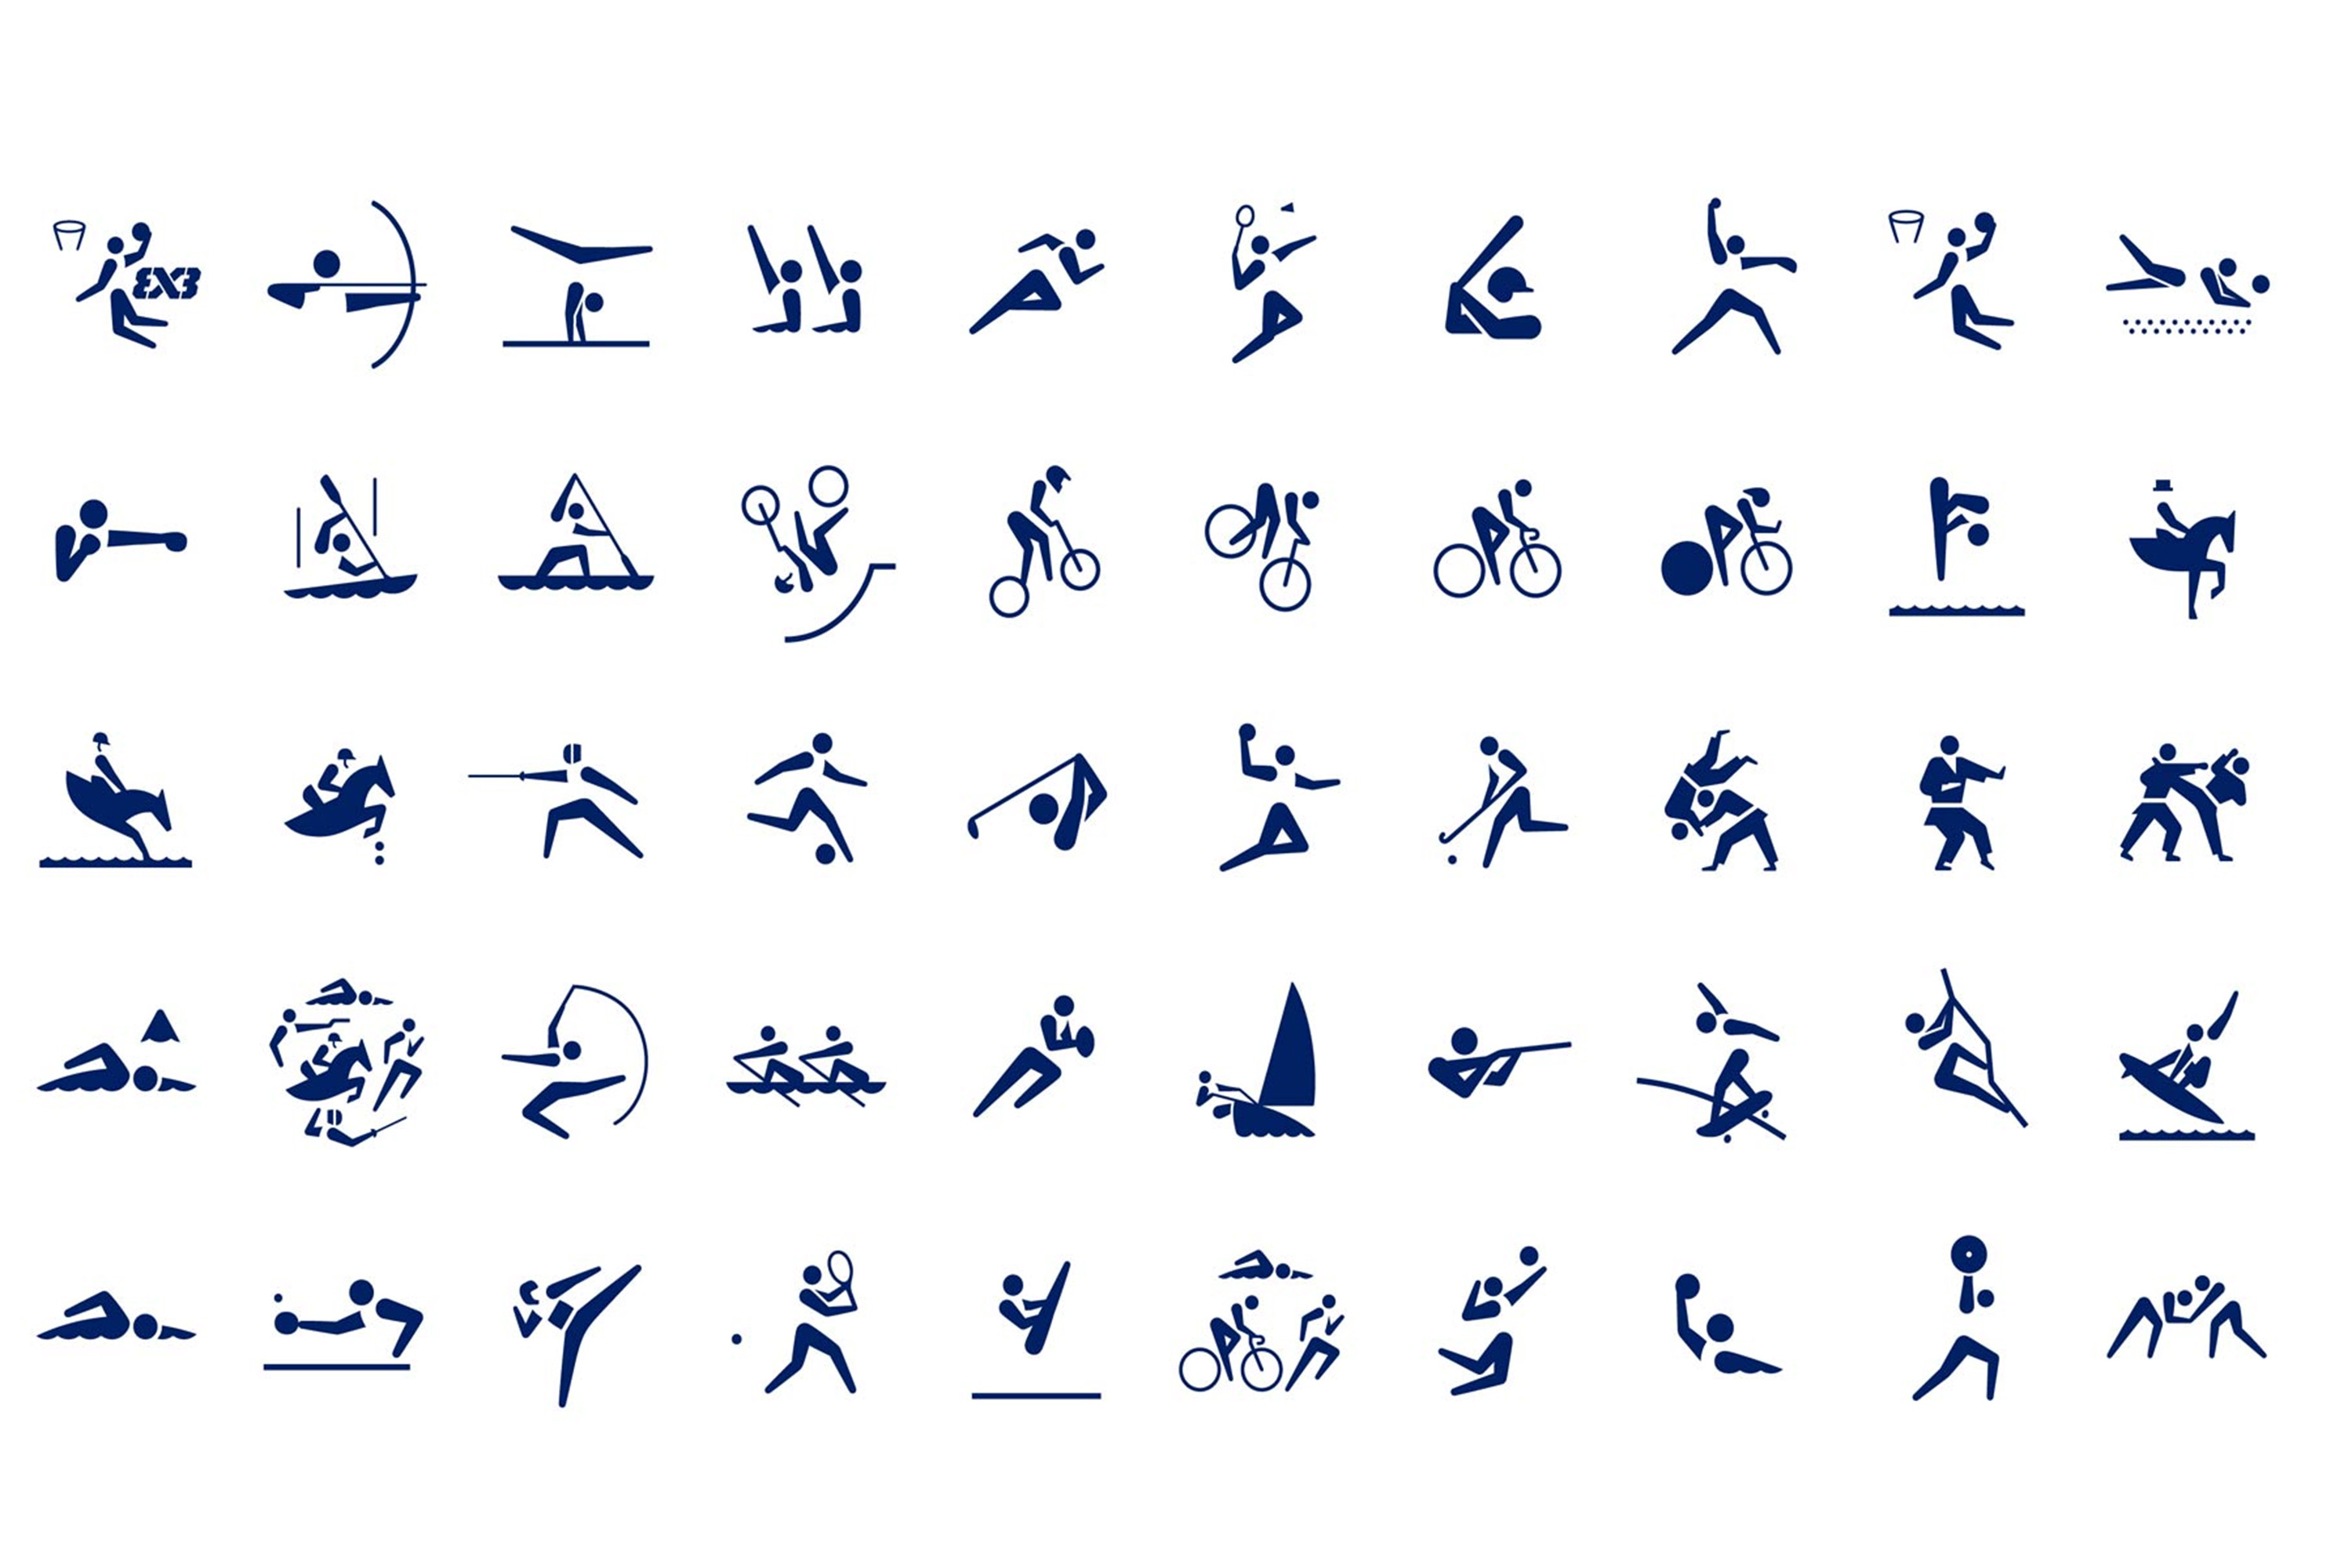 A 500 dias dos Jogos, Tóquio-2020 lança pictogramas das modalidades